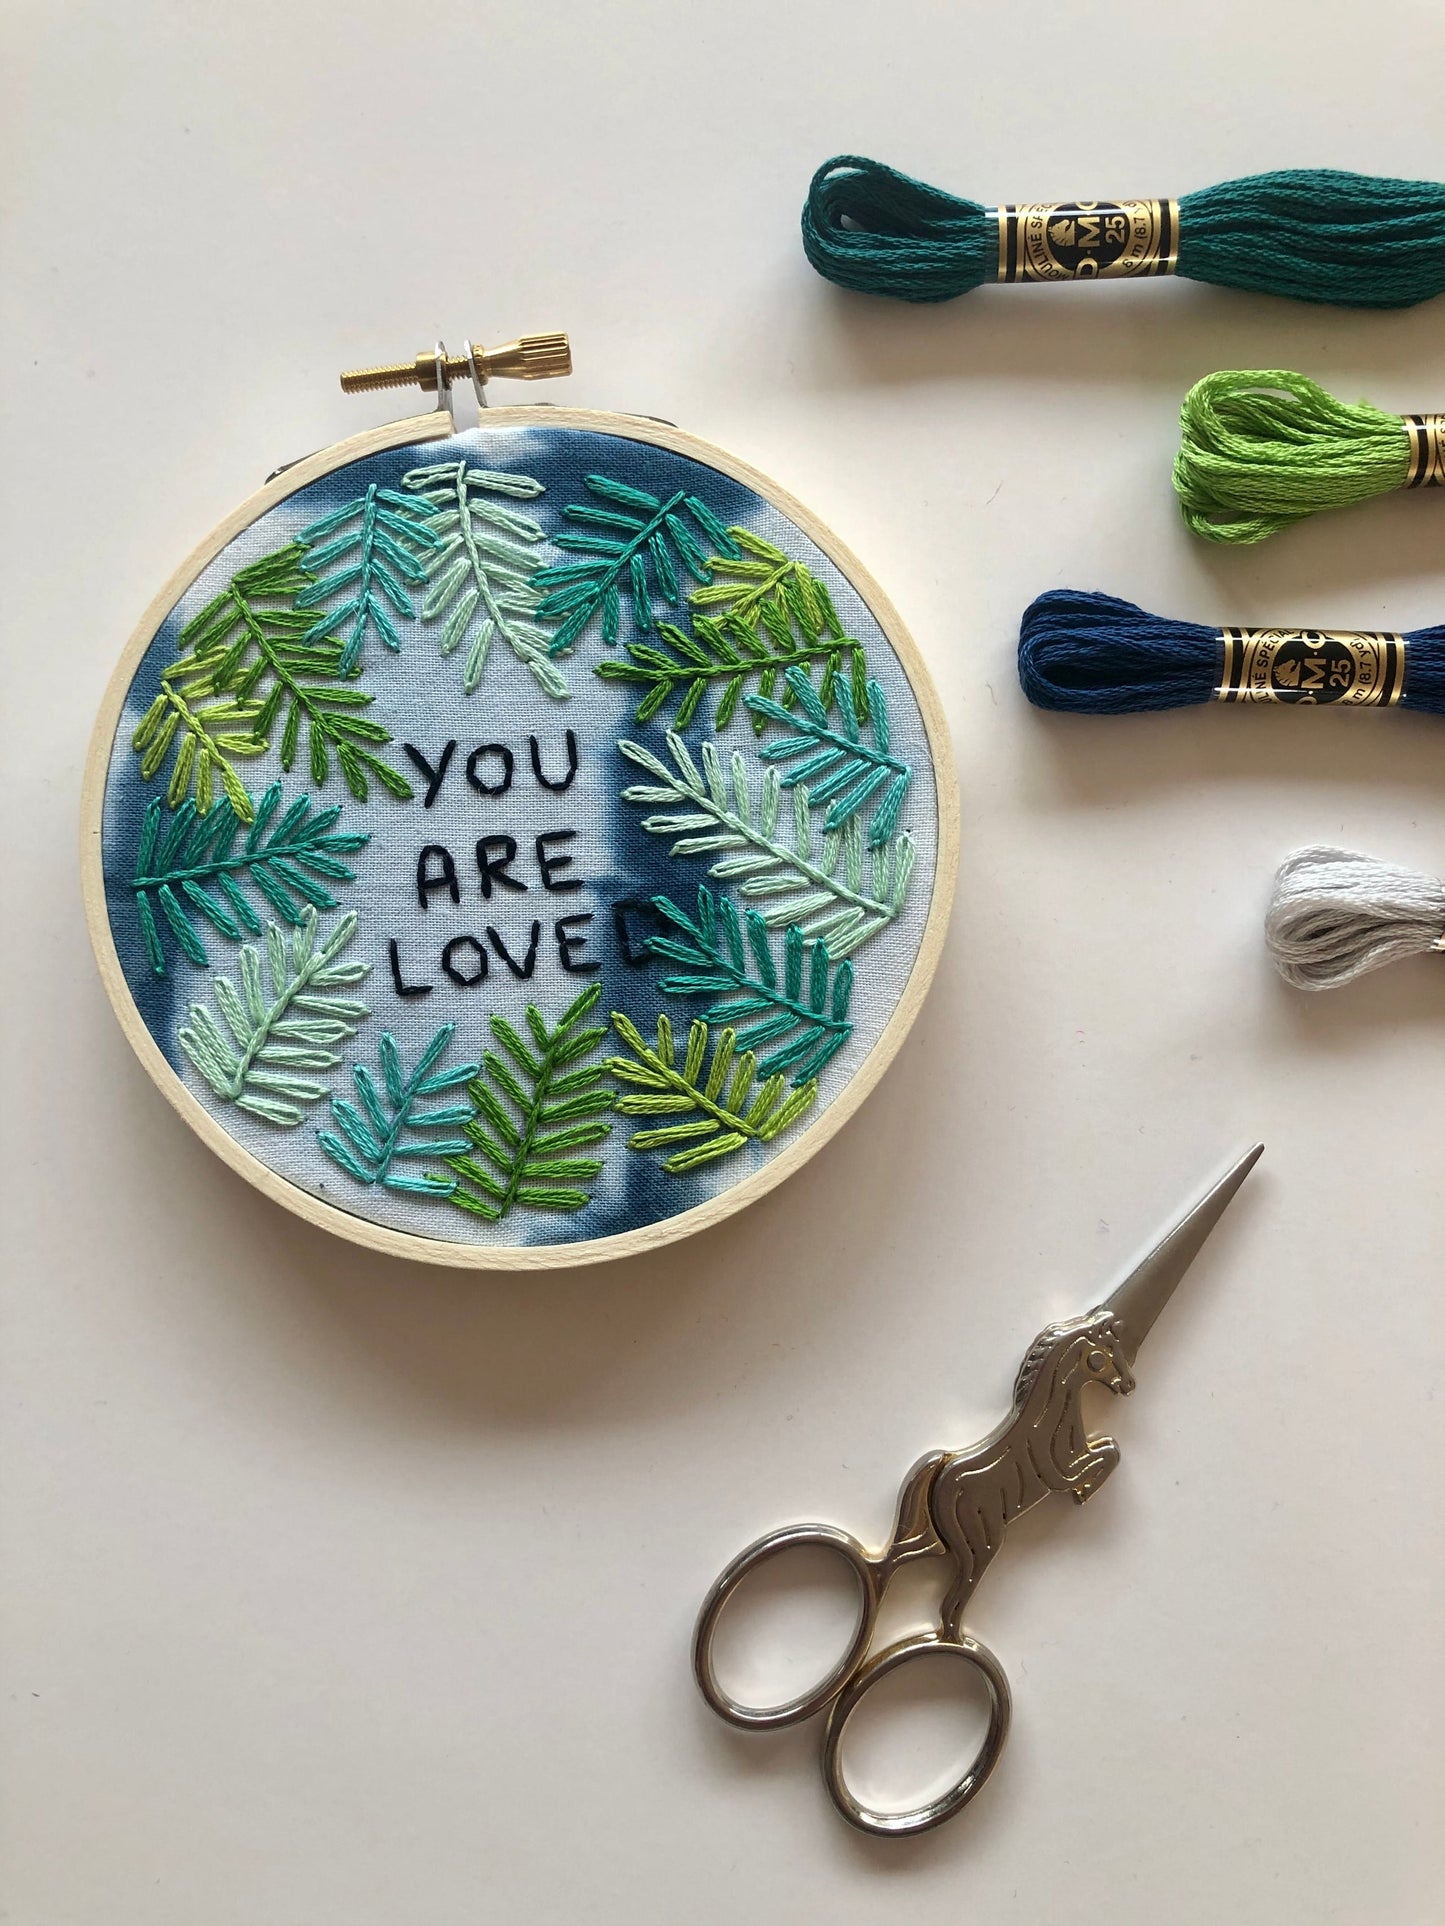 Positive Plants -Beginner Embroidery DIY Craft Kit